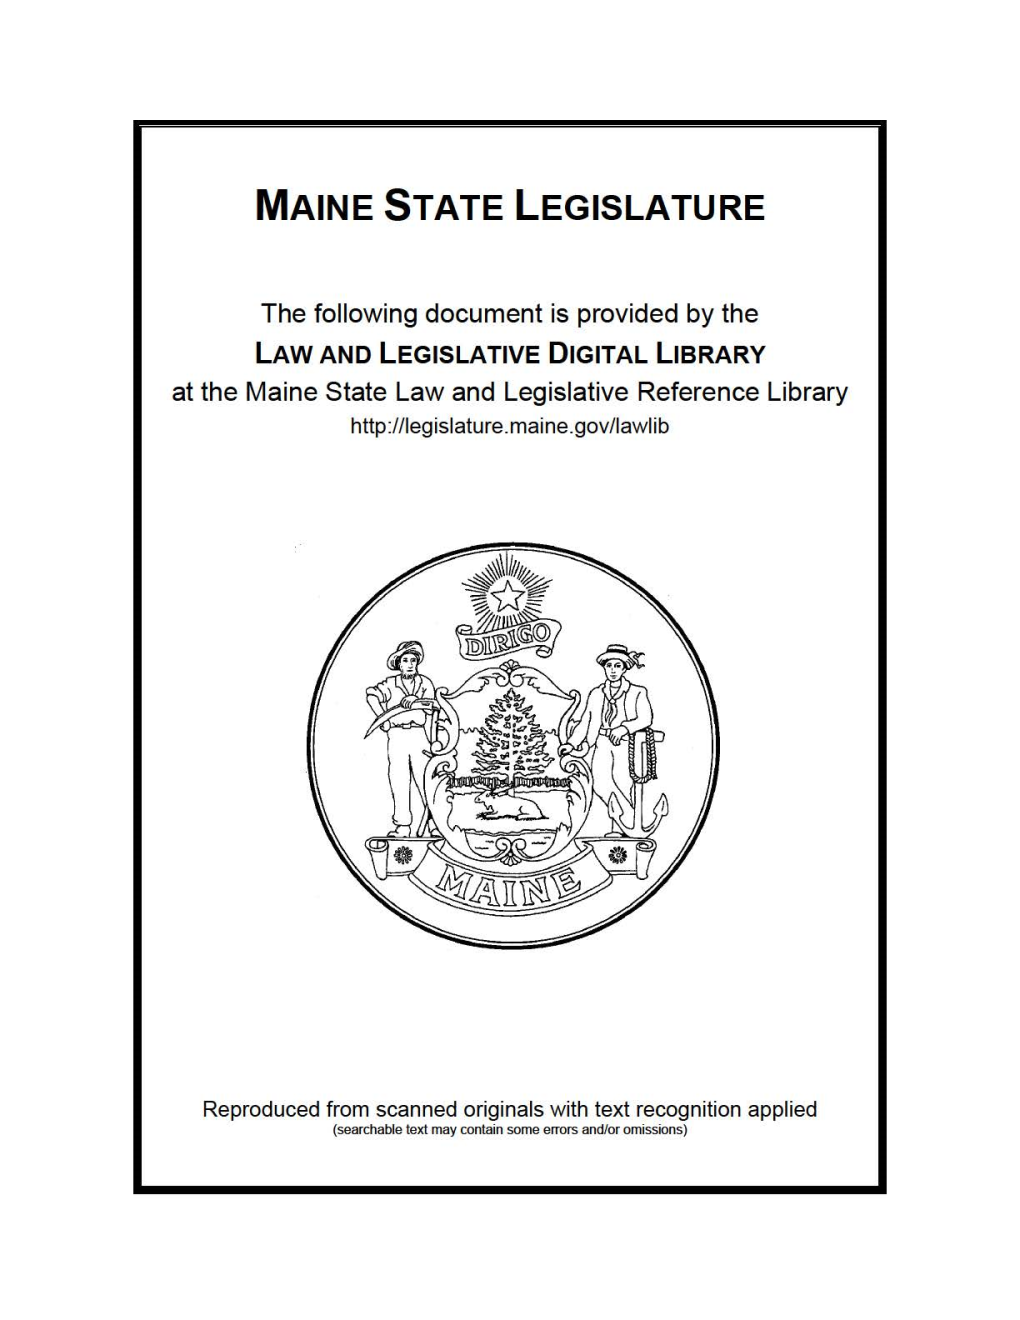 Maine Native American Economic Systems